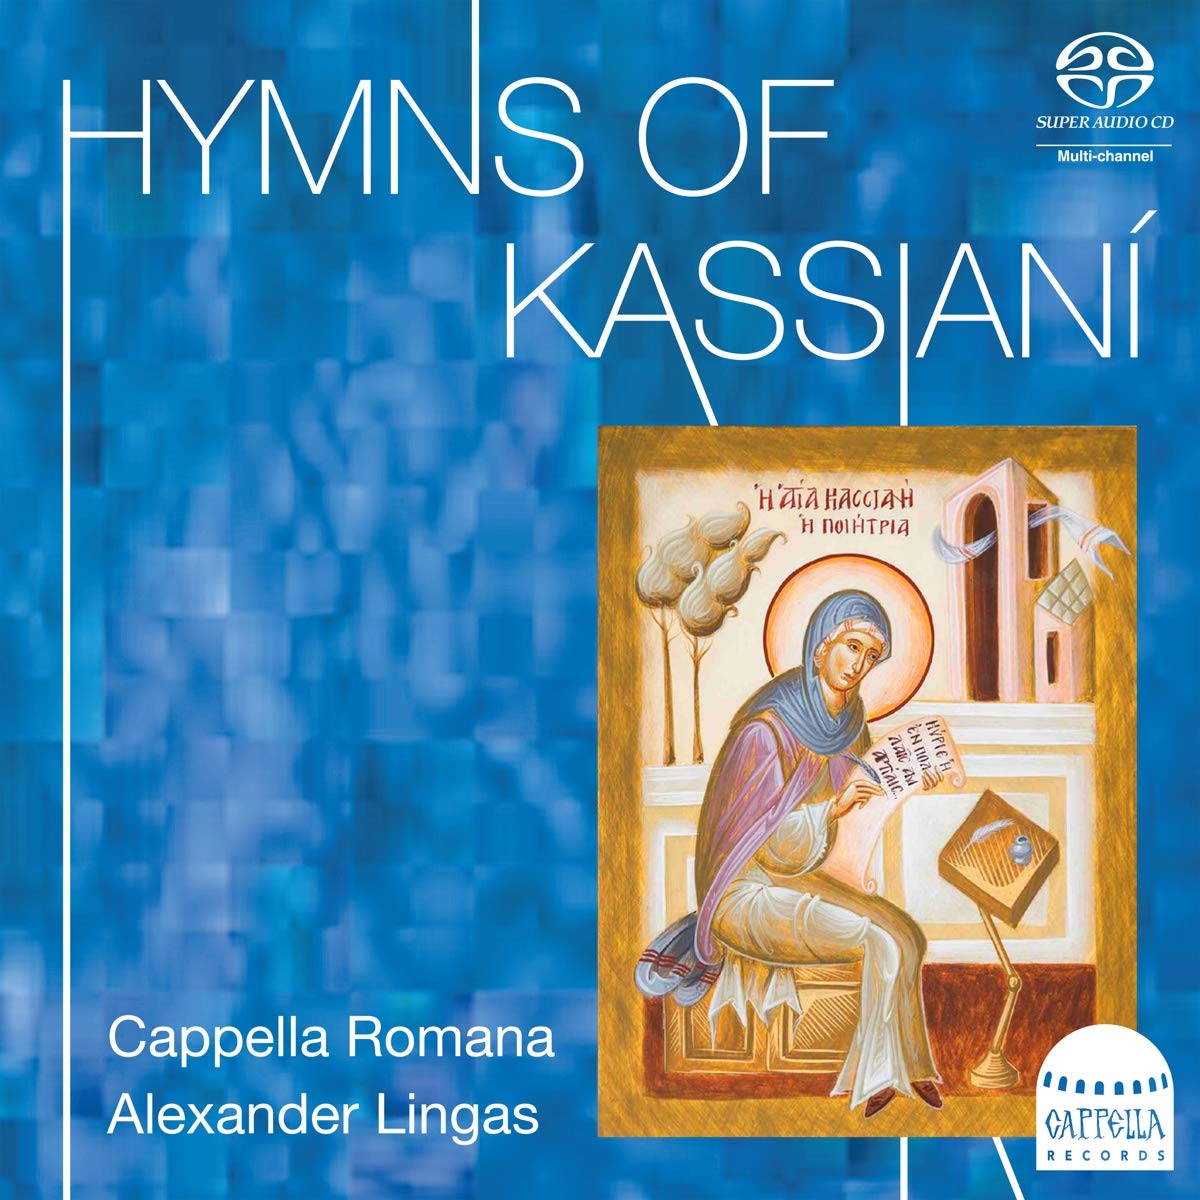 Cappella Romana, Alexander Lingas – Hymns of Kassiani (2021) [FLAC 24bit/192kHz]